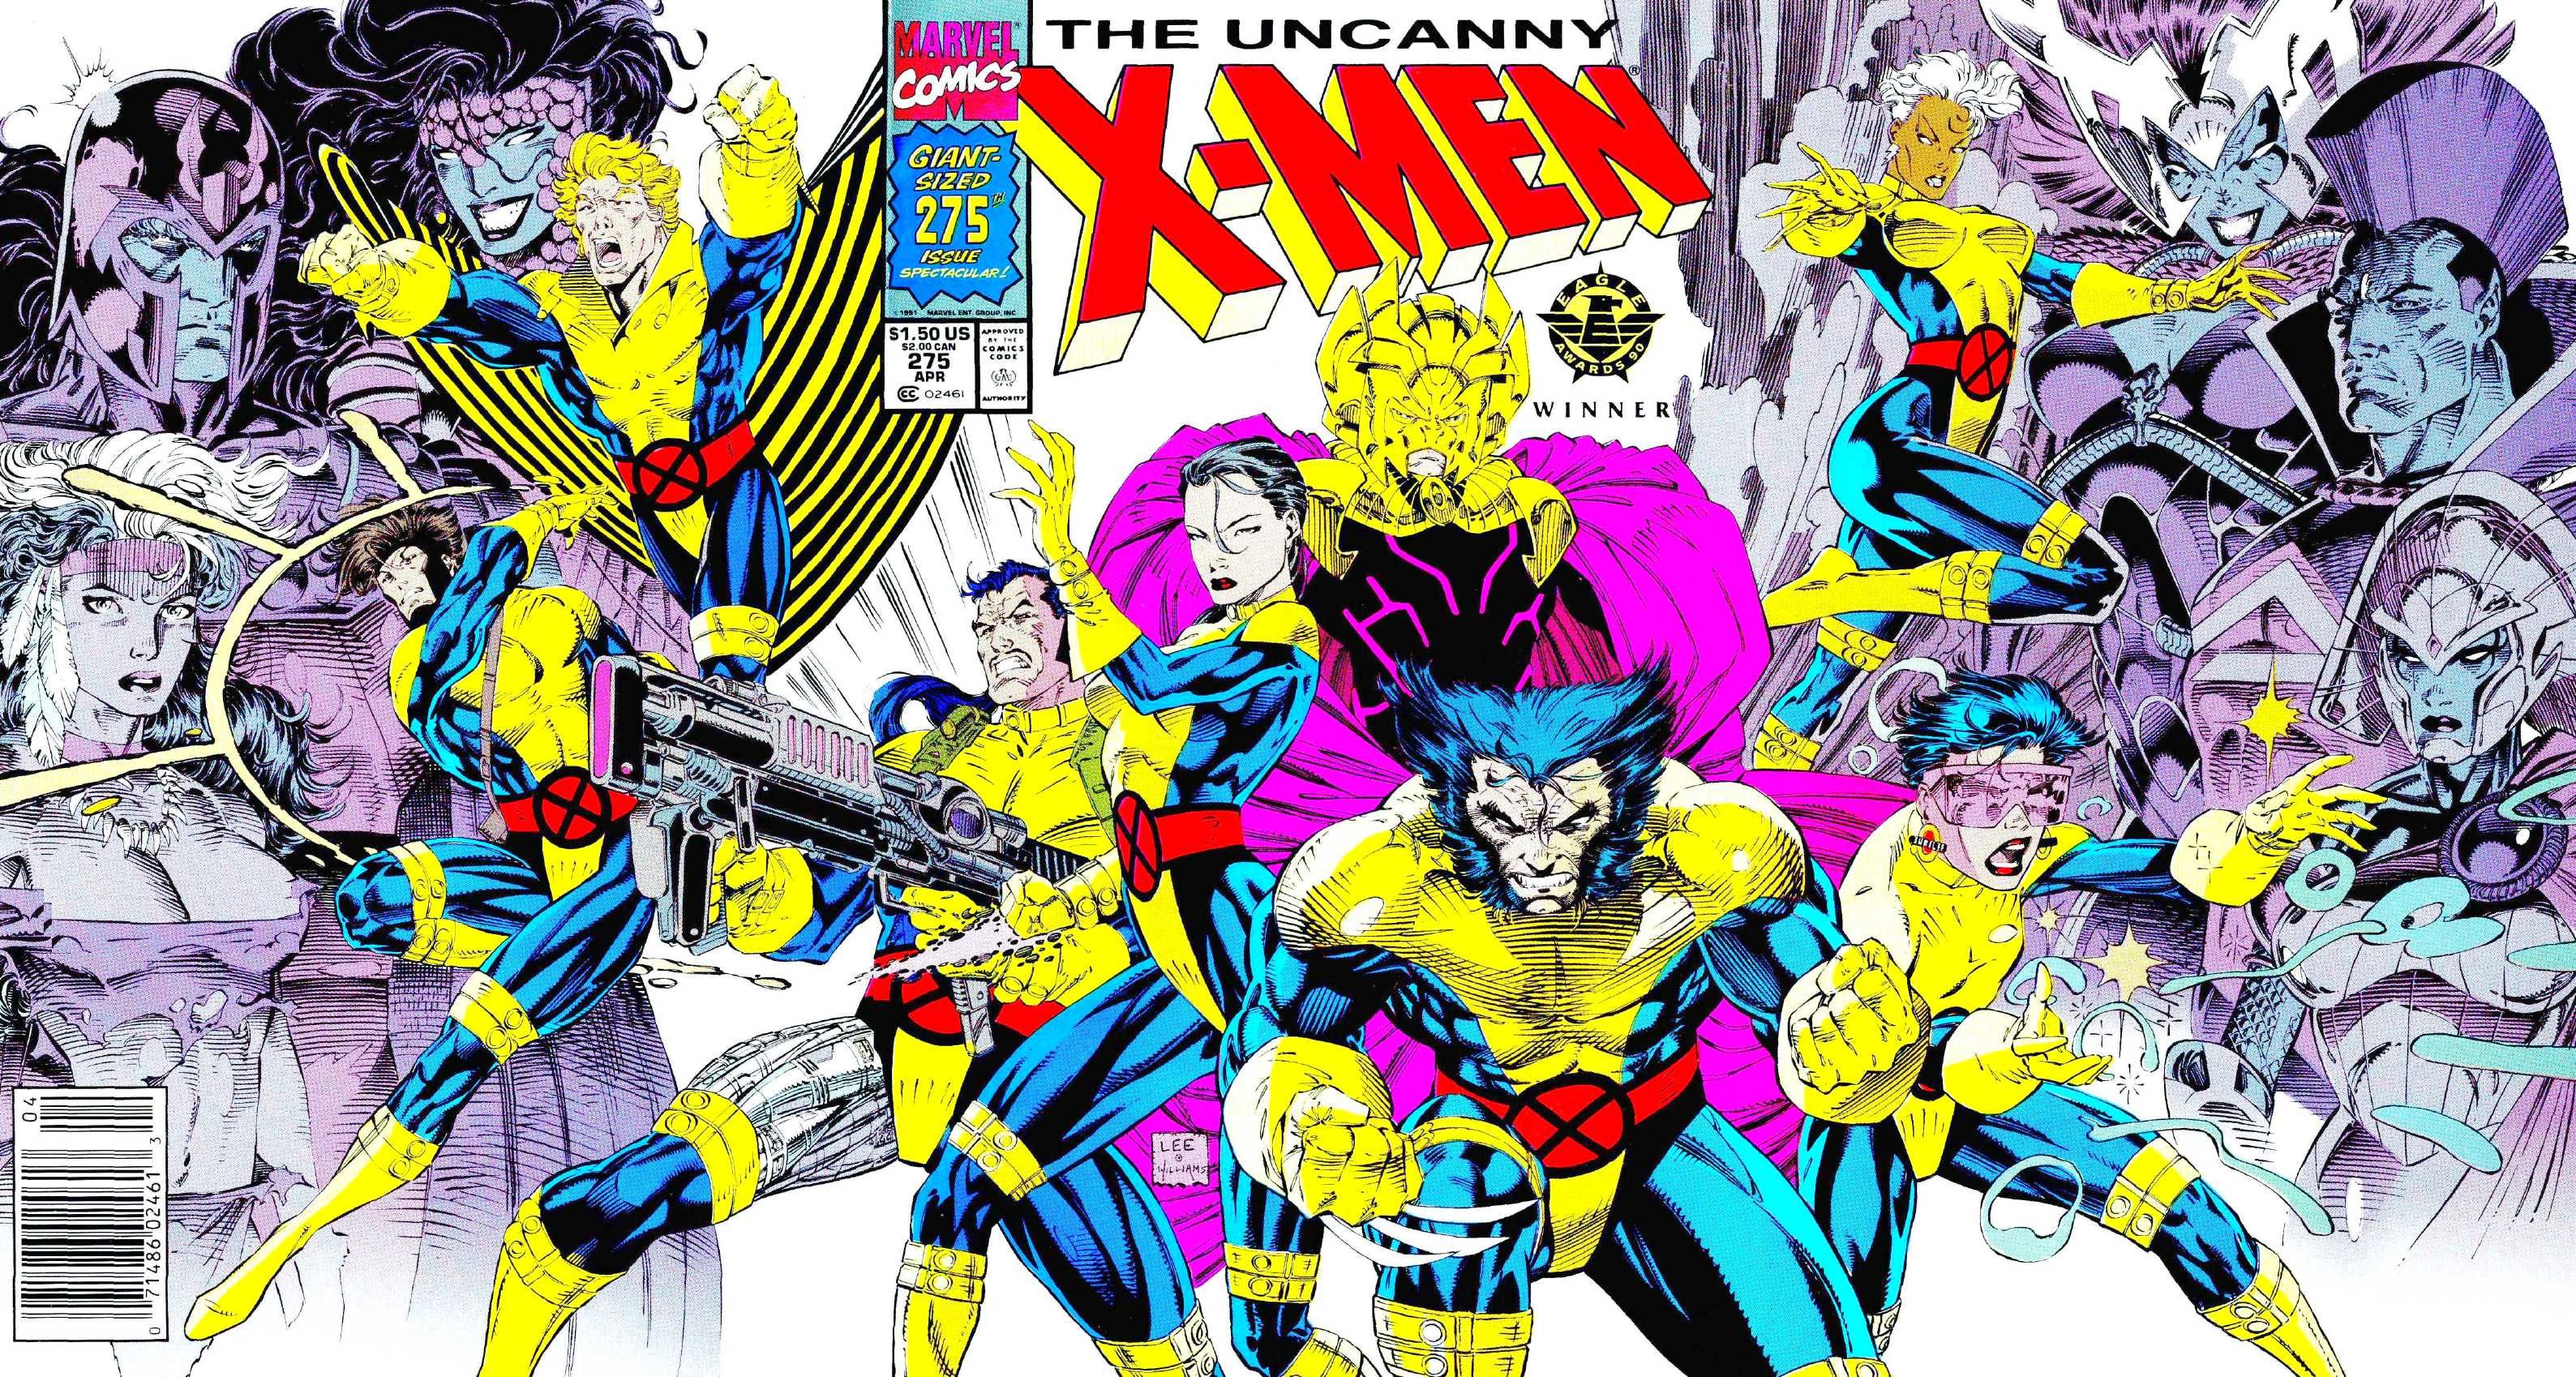 Uncanny X-Men 275